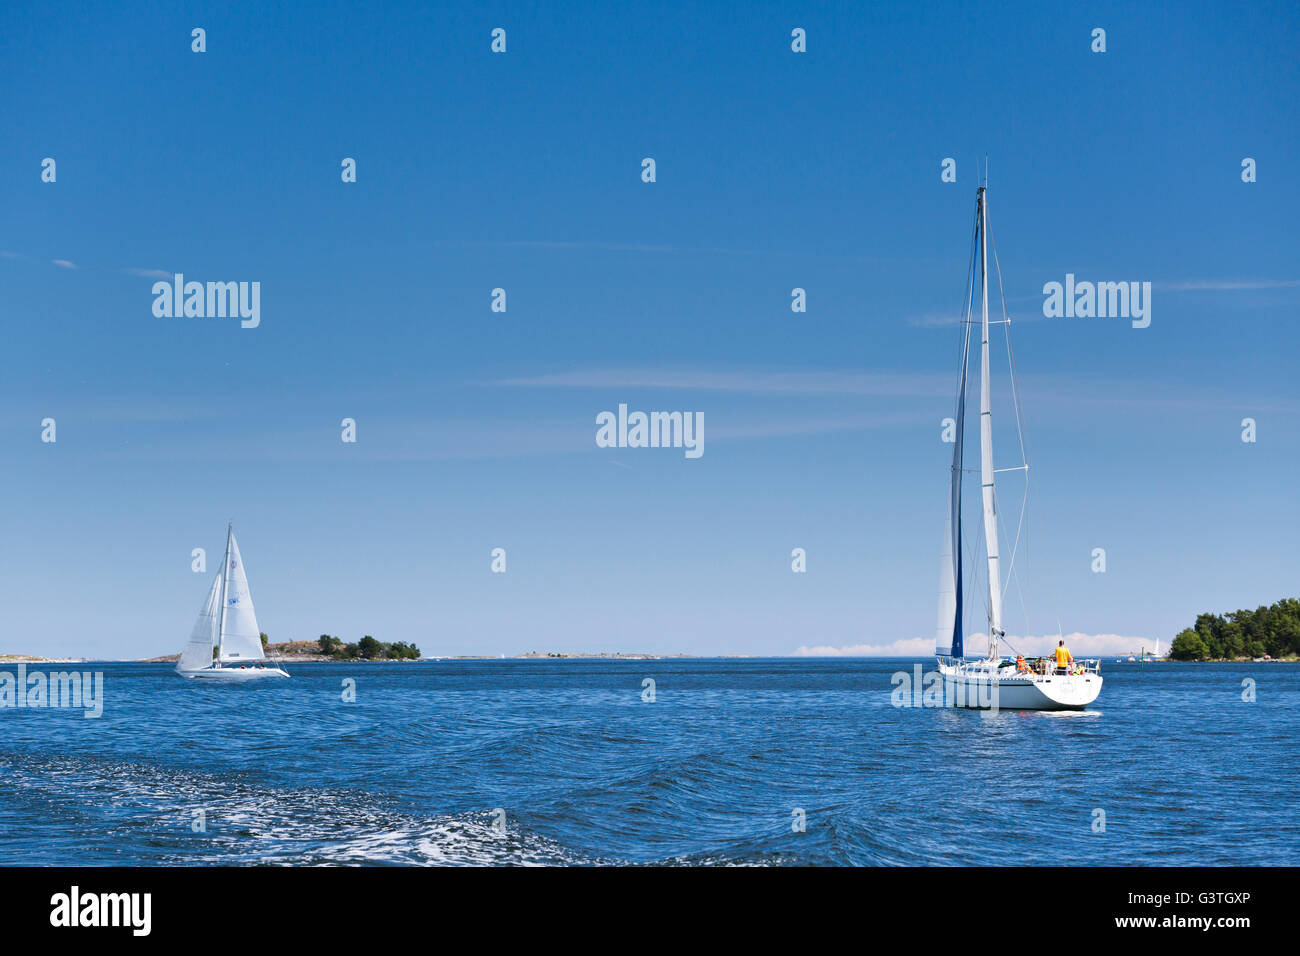 Sweden, Uppland, Stockholm Archipelago, Sailboats at sea Stock Photo